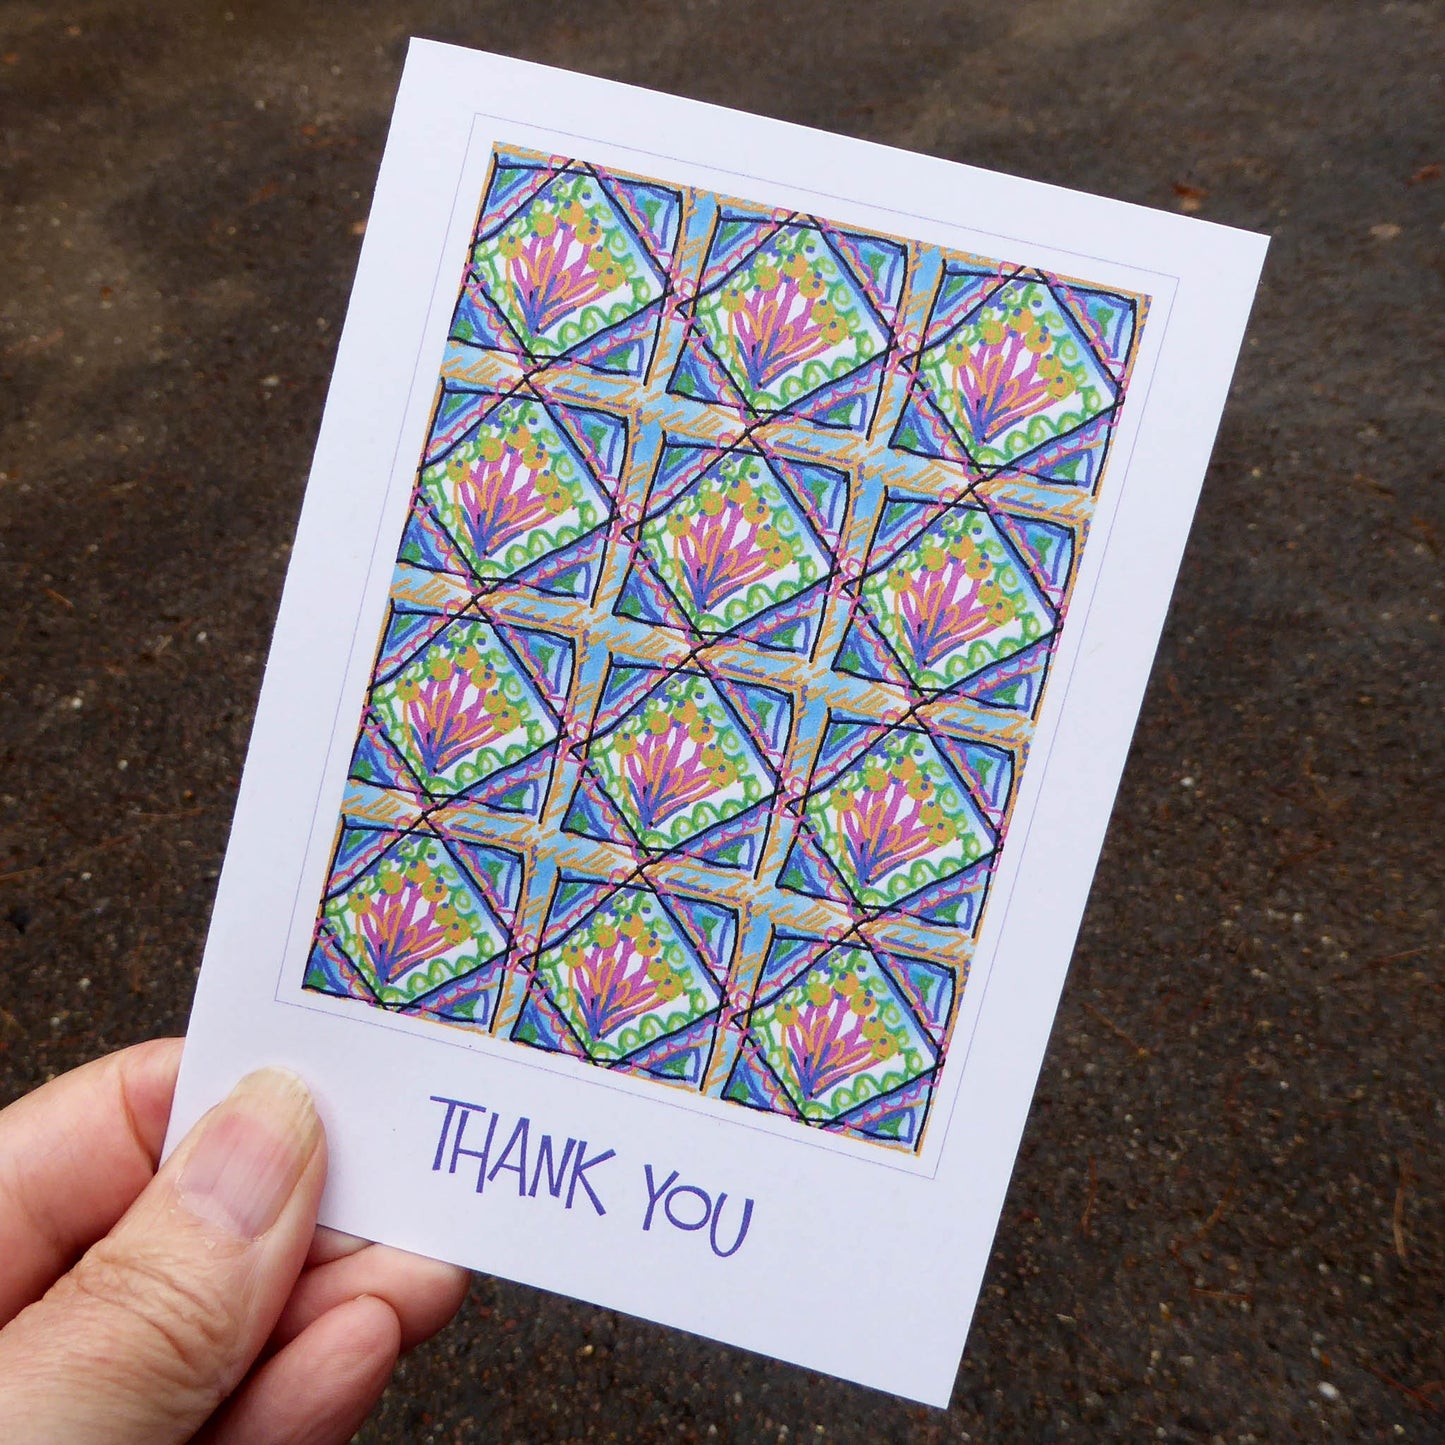 Single Greetings Card - Thank you - Recycled - Handmade - by Norfolk based artist Debbie Osborn